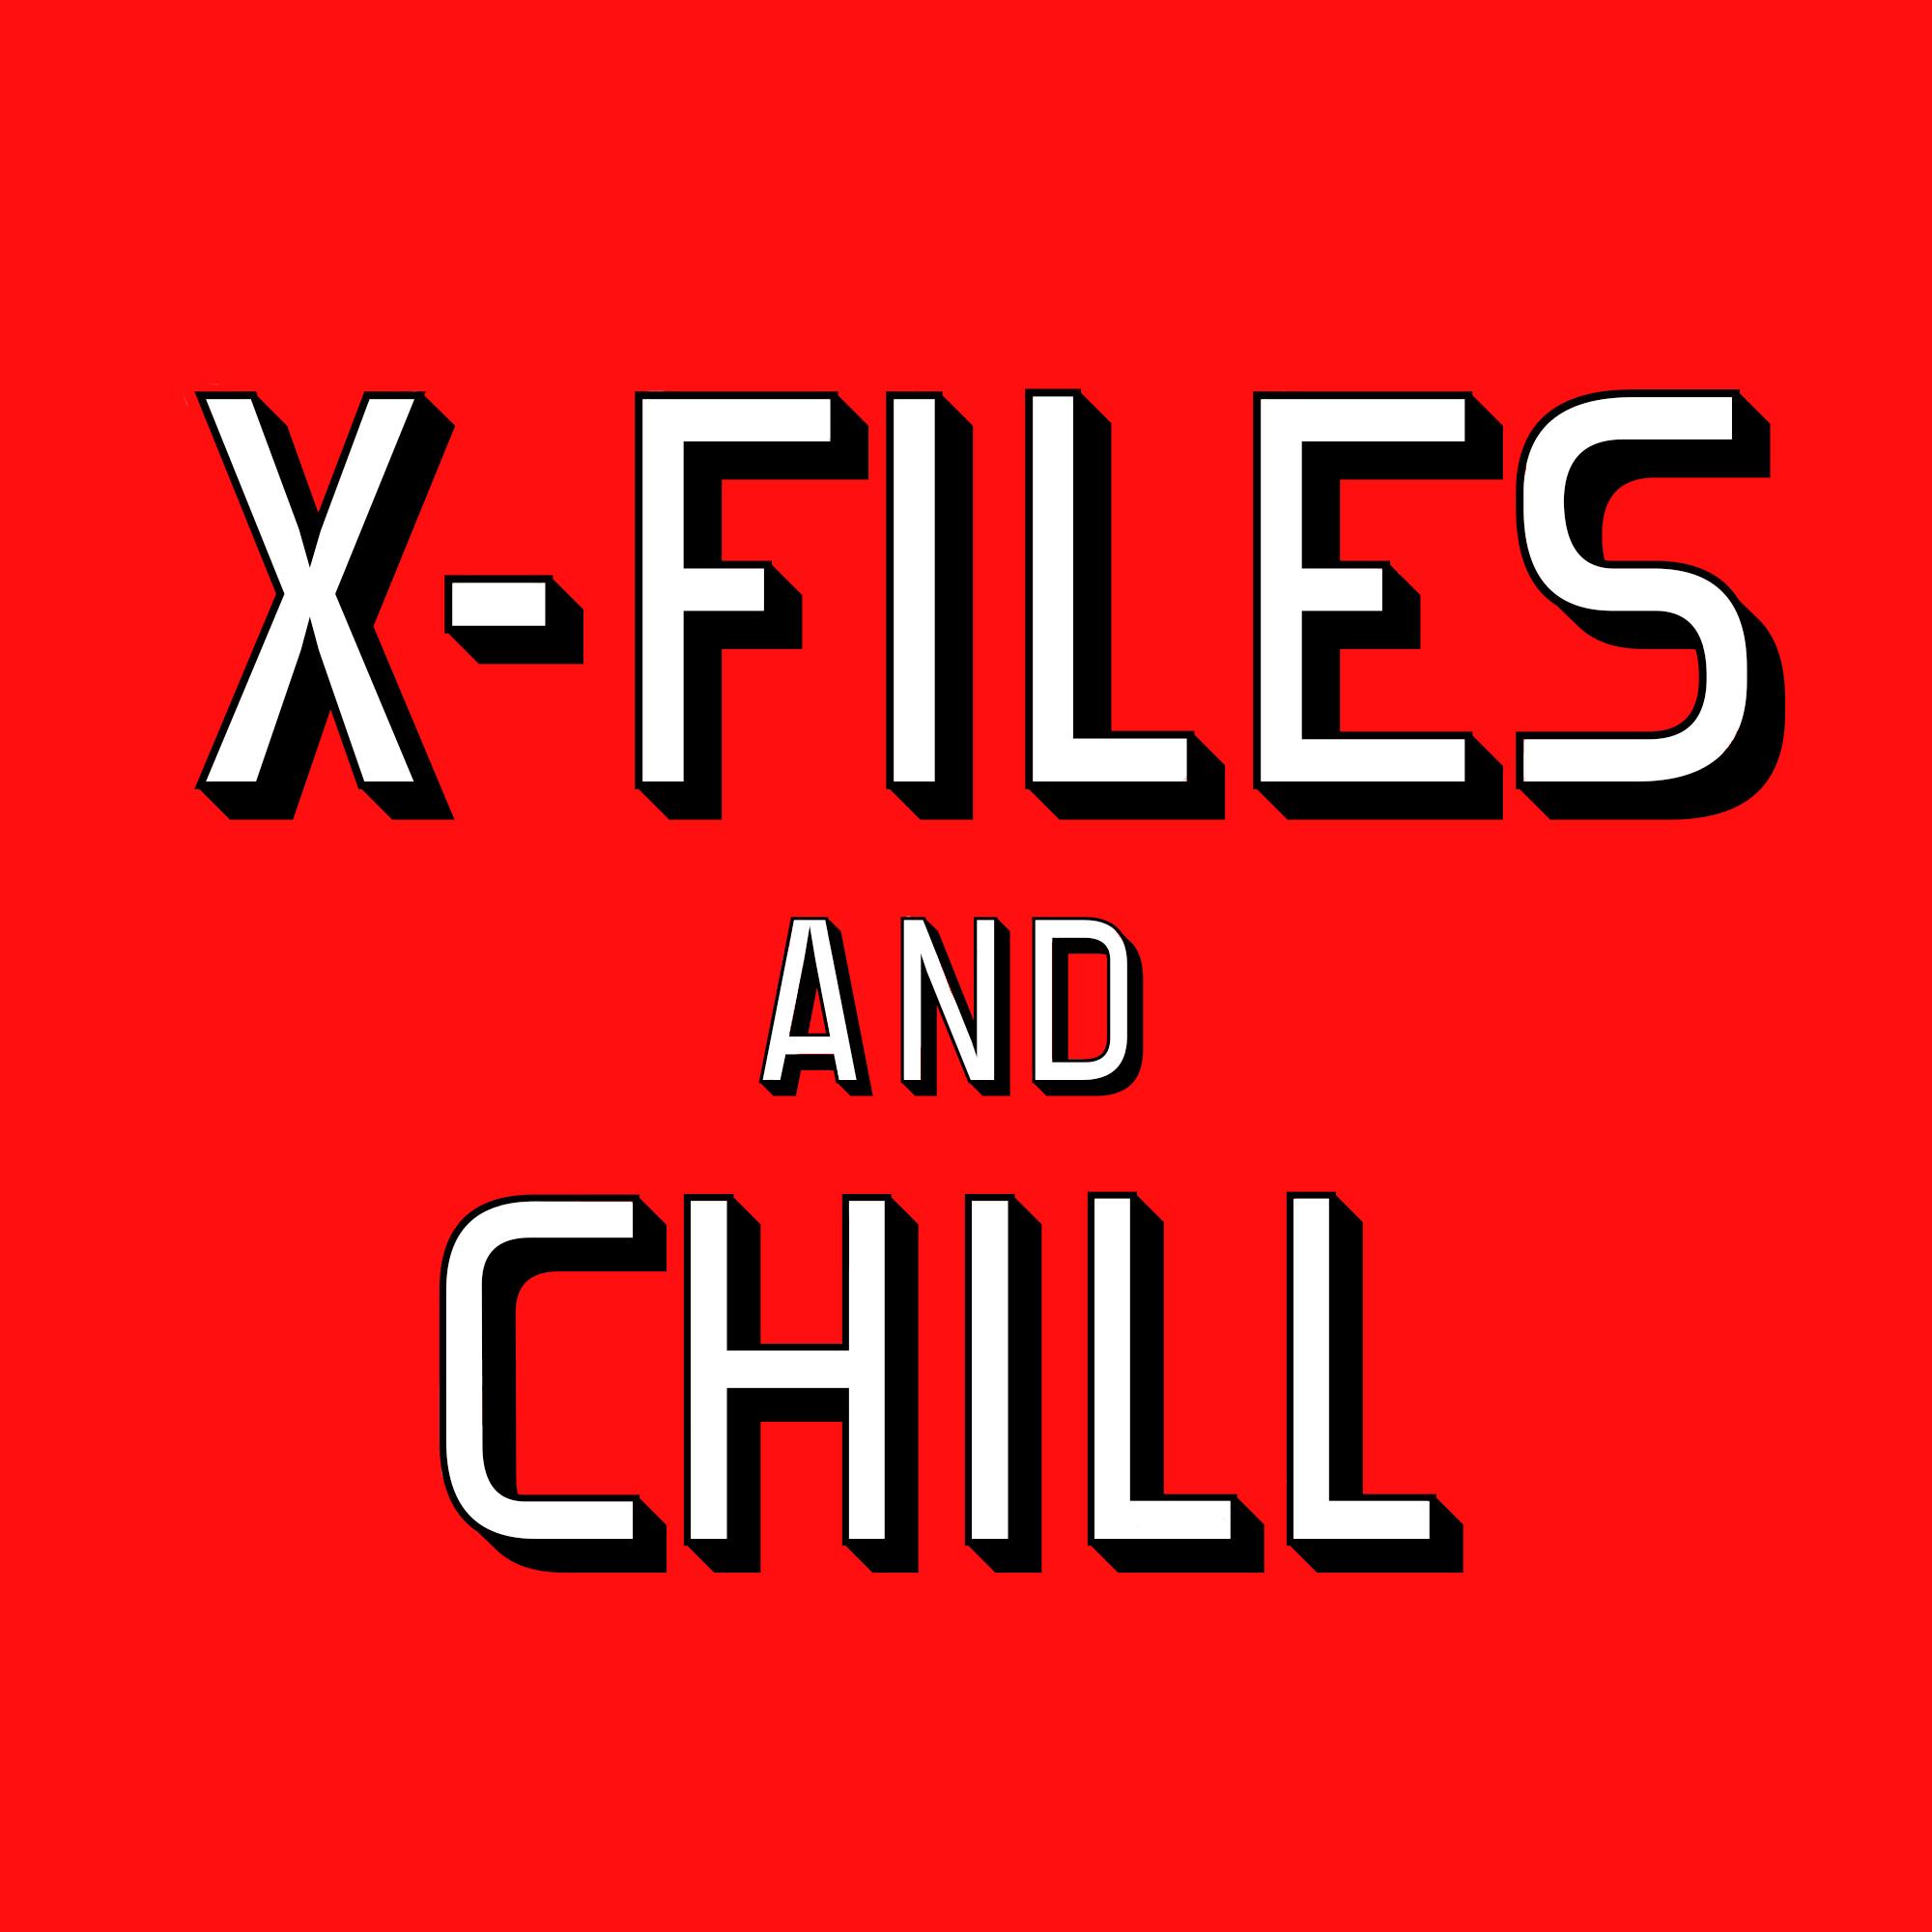 X Files & Chill. Netflix and Chill